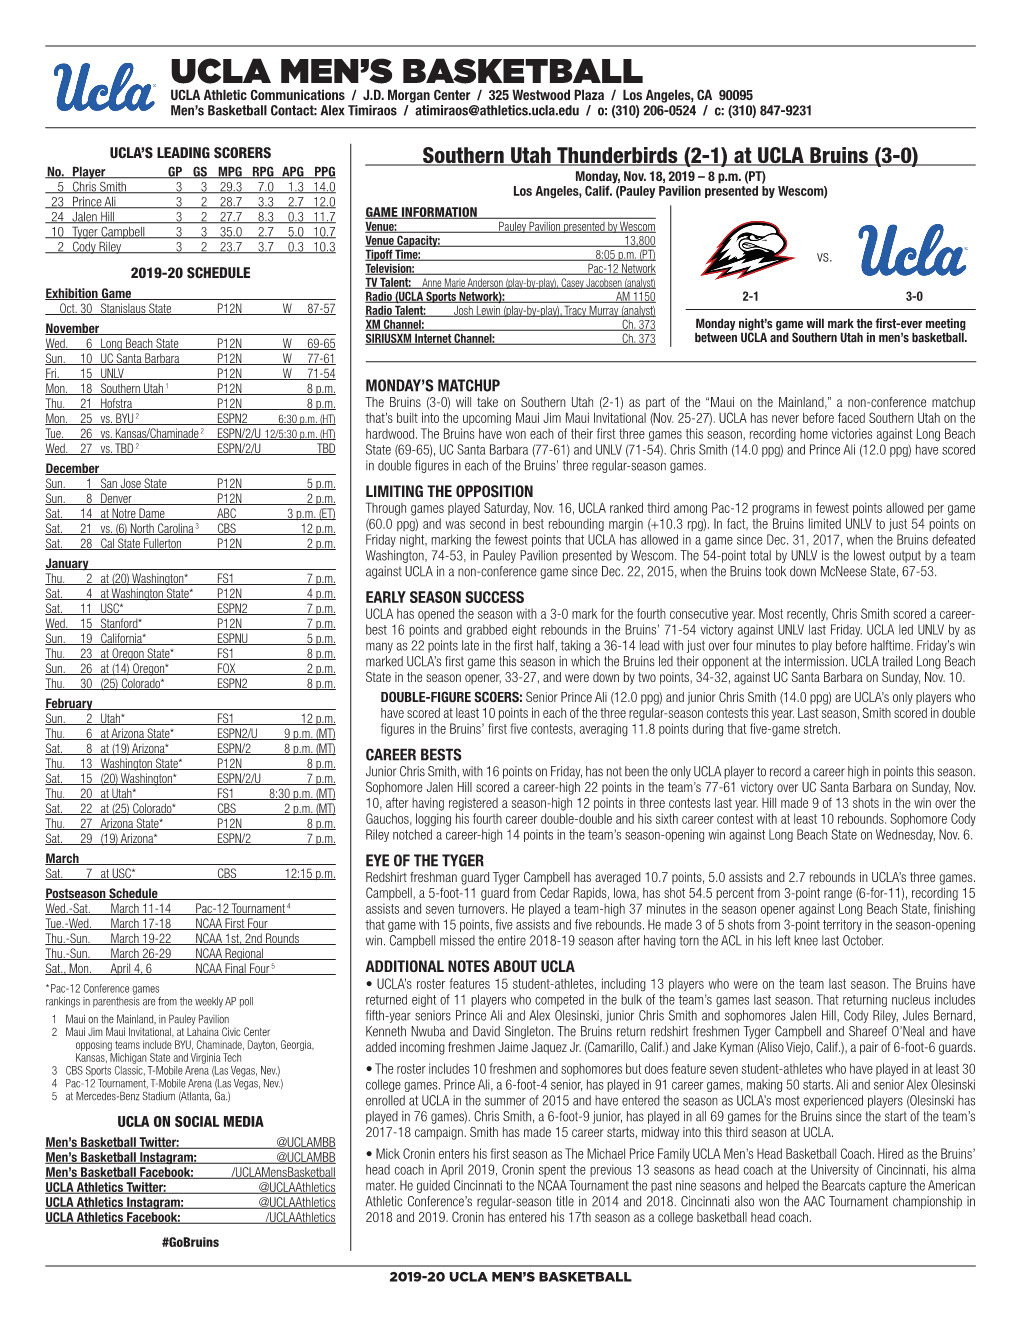 UCLA Men's Basketball UCLA’Sucla SEASON/Careerseason/Career Statistics (As of Nov 15, STATS 2019) 2019-20All Gamesroster